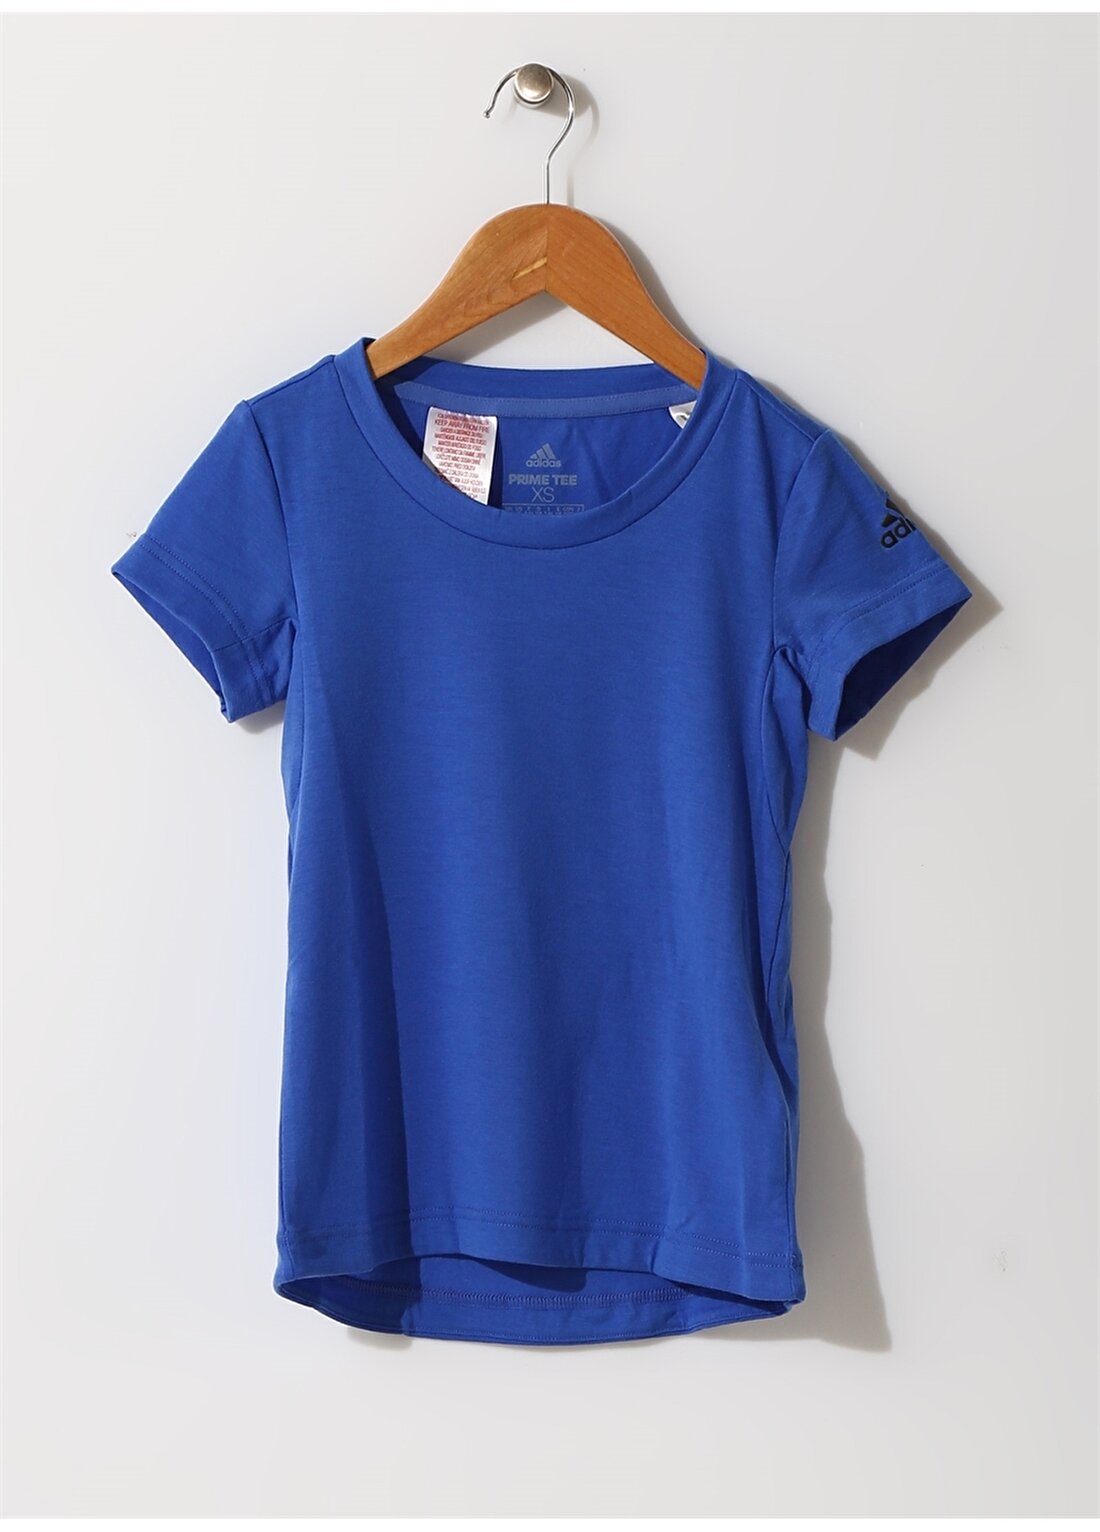 Adidas 81-CF7220-YG Prime Bisiklet Yaka Kısa Kollu Mavi Kız Bebek T-Shirt